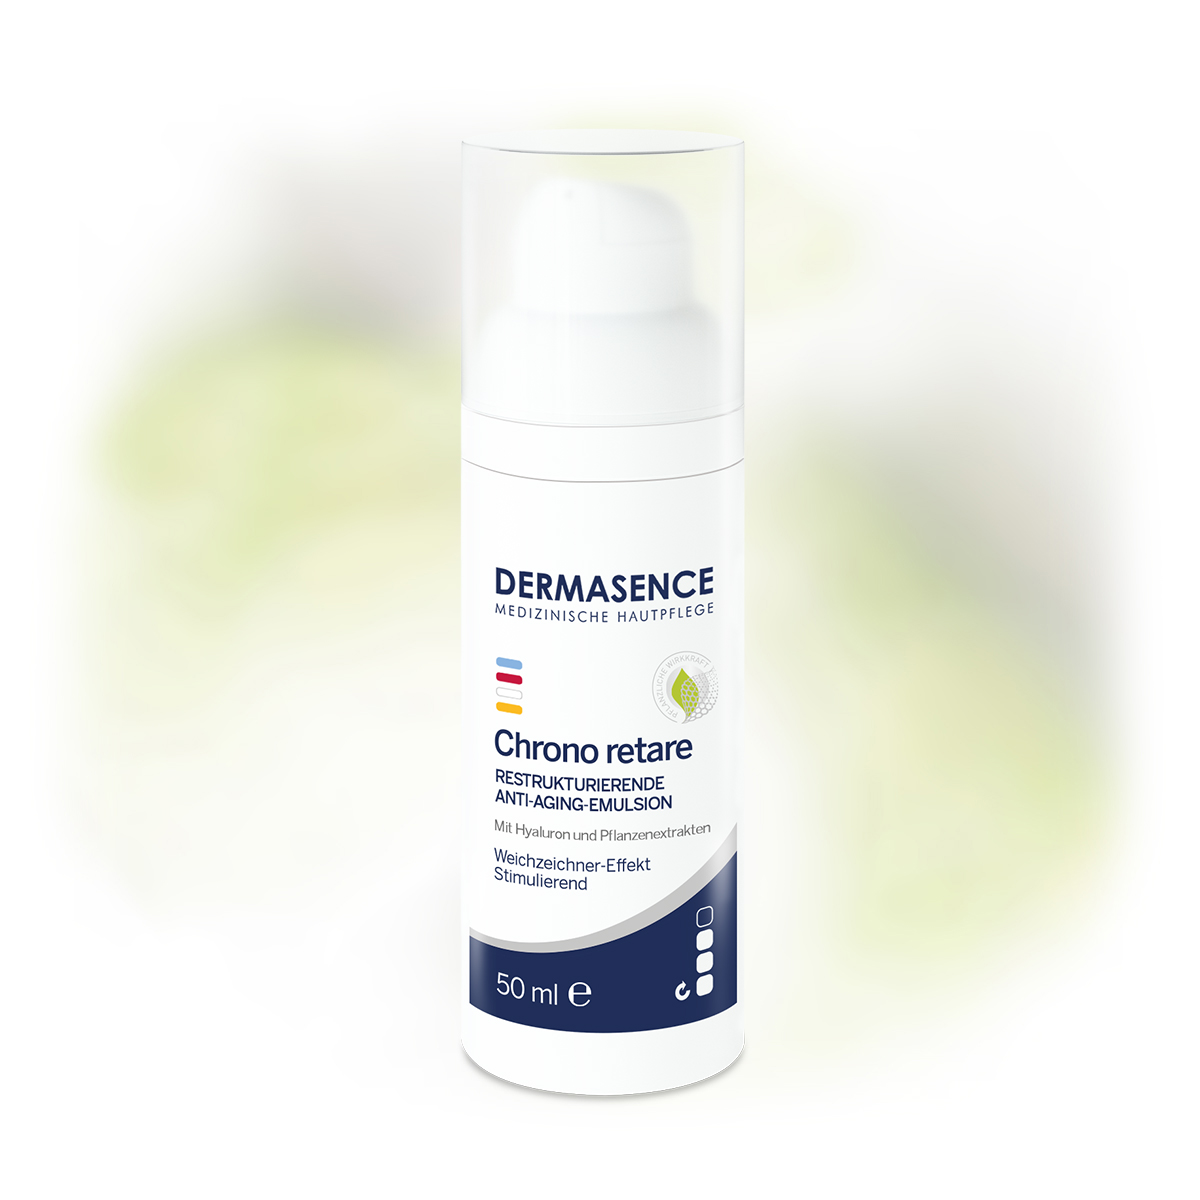 DERMASENCE Chrono retare Restrukturierende Anti-Aging Emulsion, 50 ml